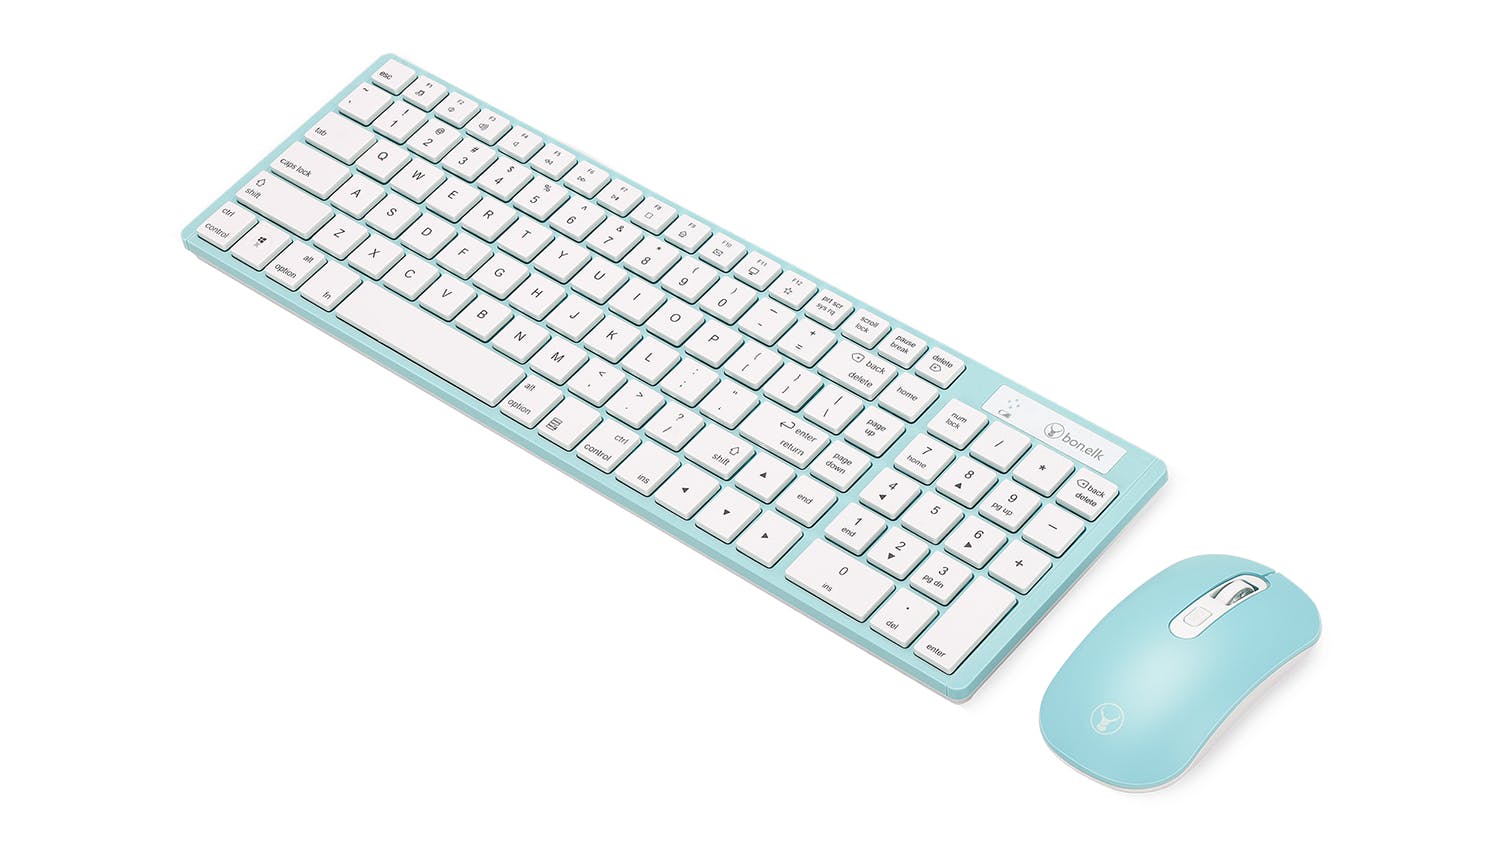 Bon.Elk Slim Wireless Keyboard and Mouse Combo KM-322 - Teal